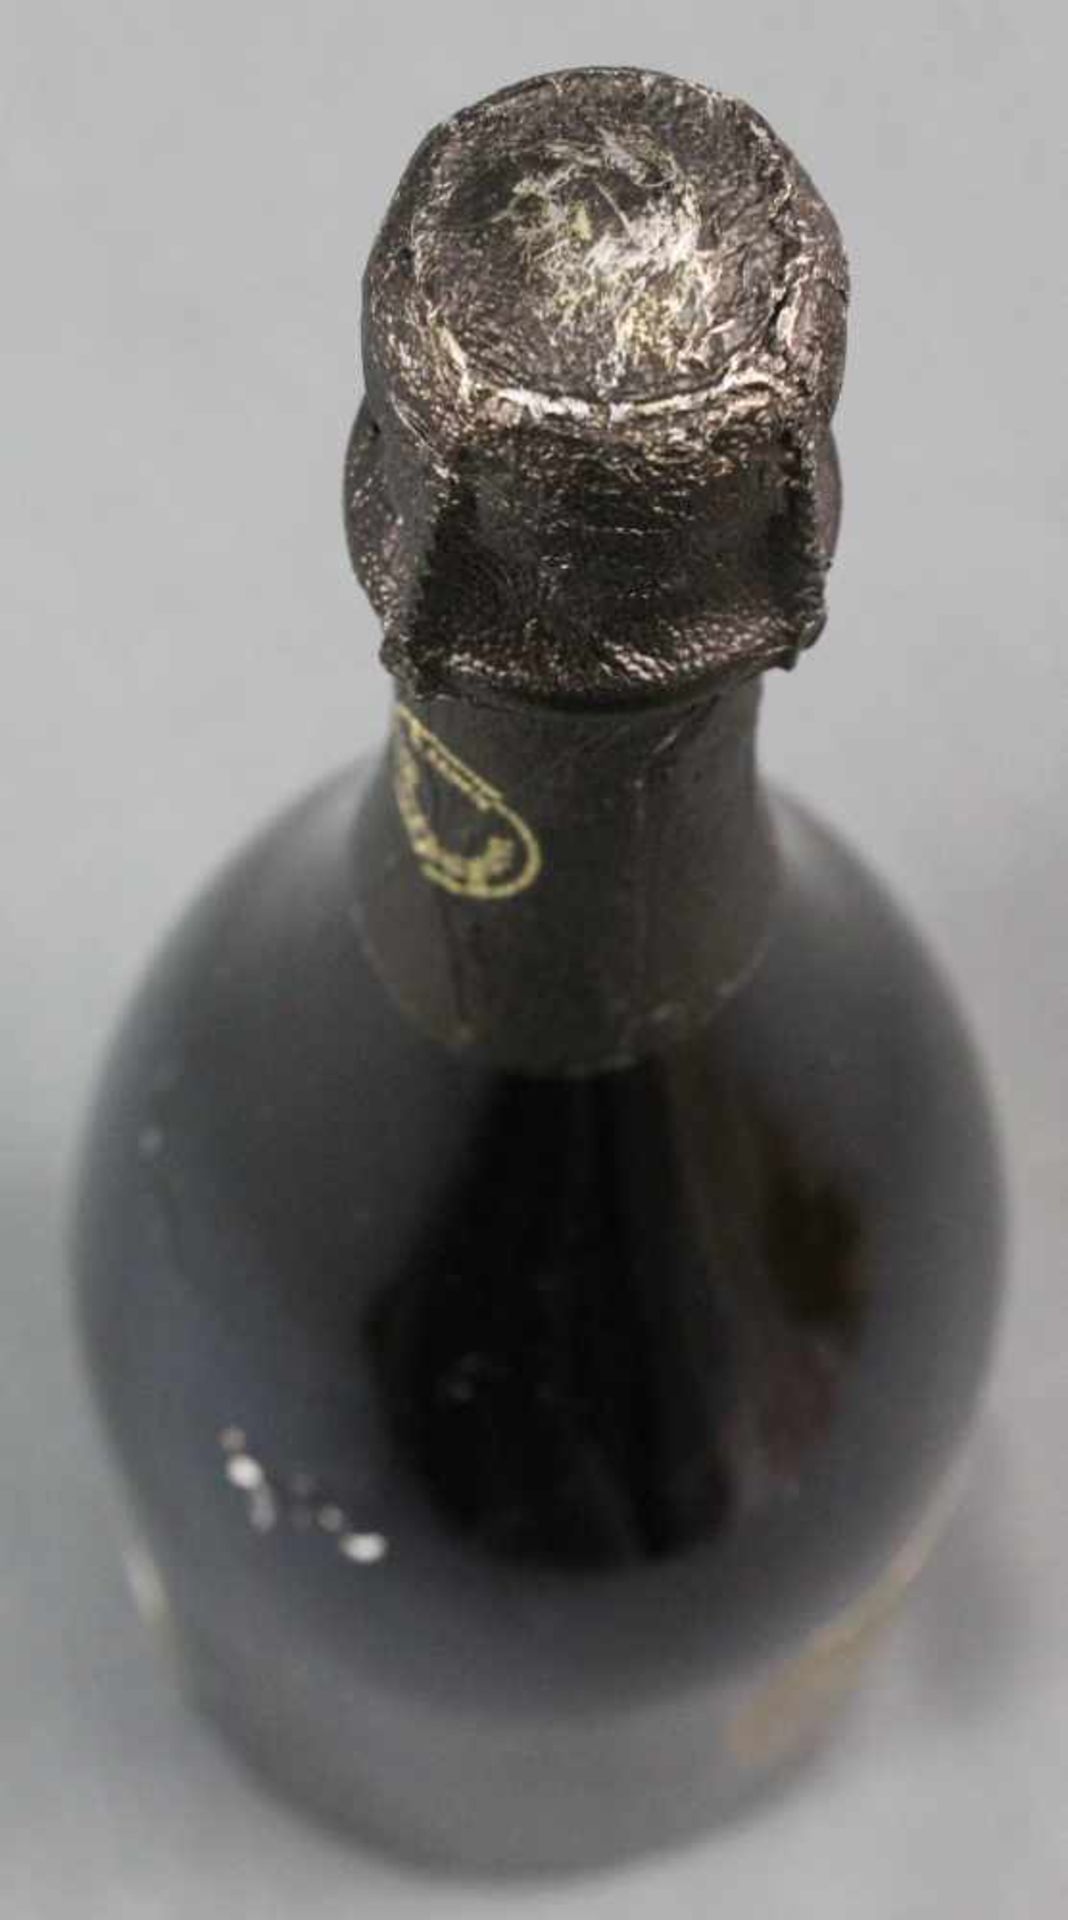 1990 Champagne. Cuvee Dom Perignon. Vintage.Moet et Chandon a Epernay. Fondee en 1743. Eine ganze - Bild 6 aus 8